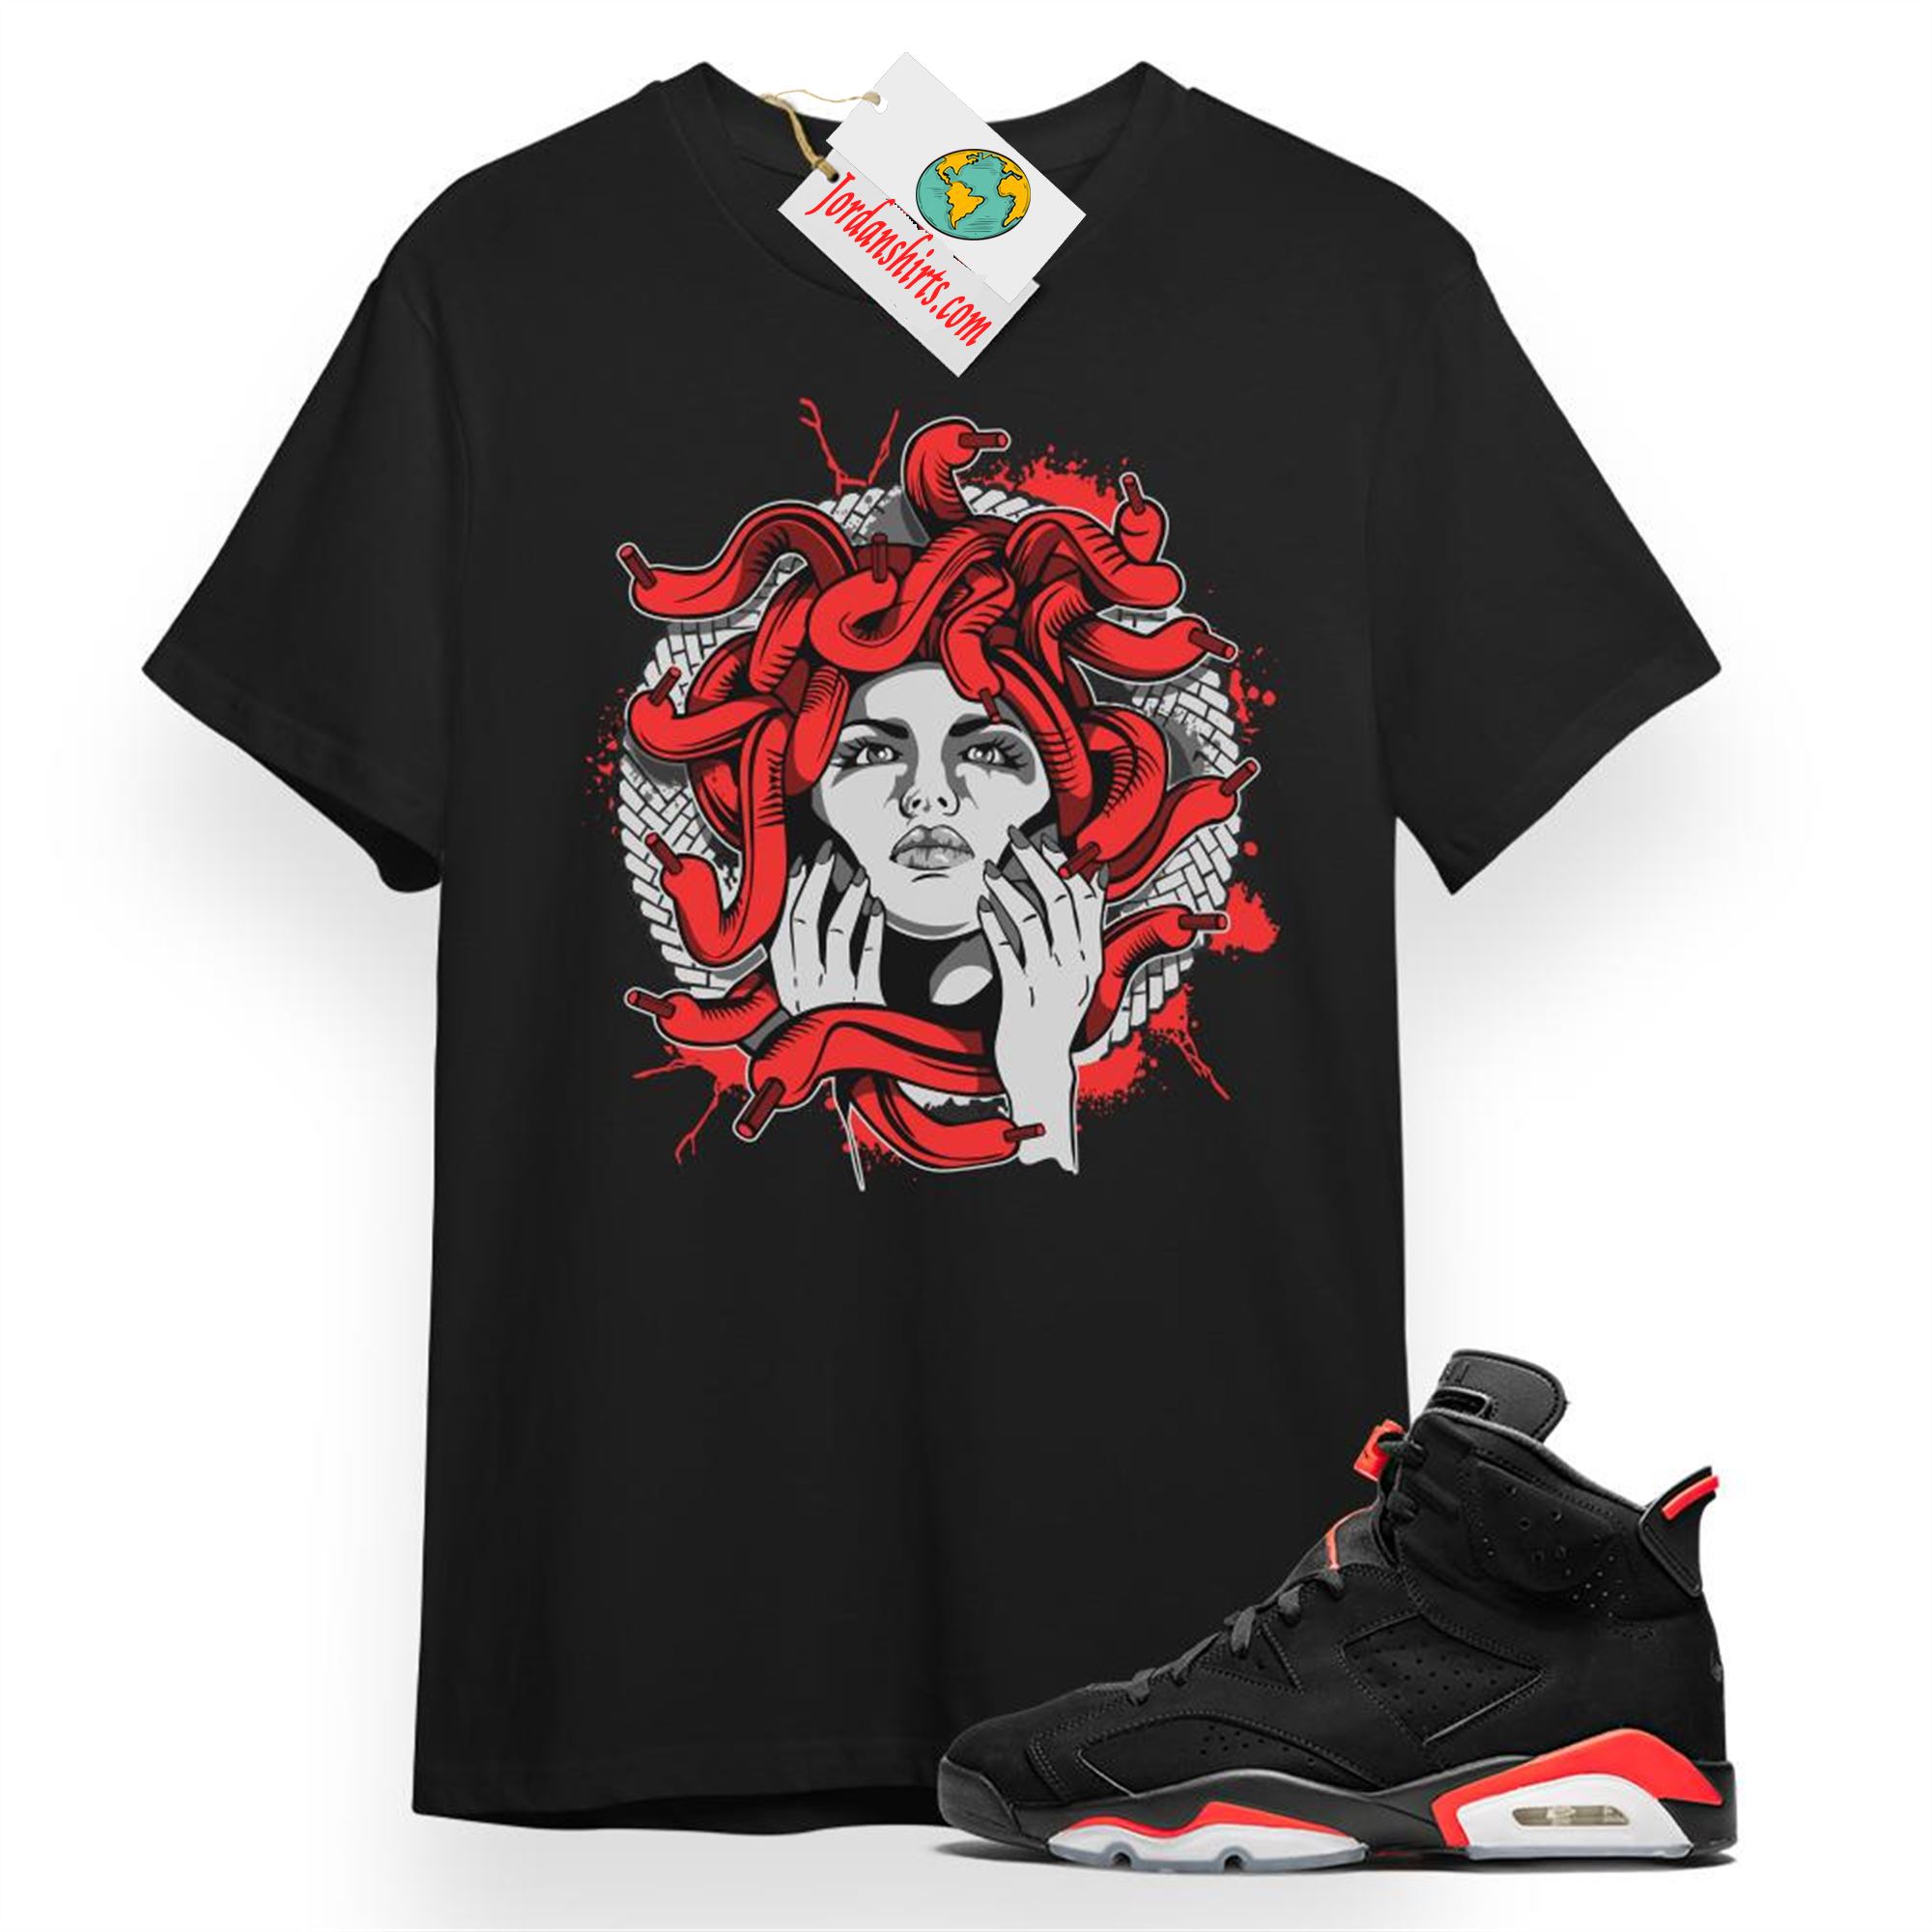 Jordan 6 Shirt, Medusa Black T-shirt Air Jordan 6 Infrared 6s Size Up To 5xl